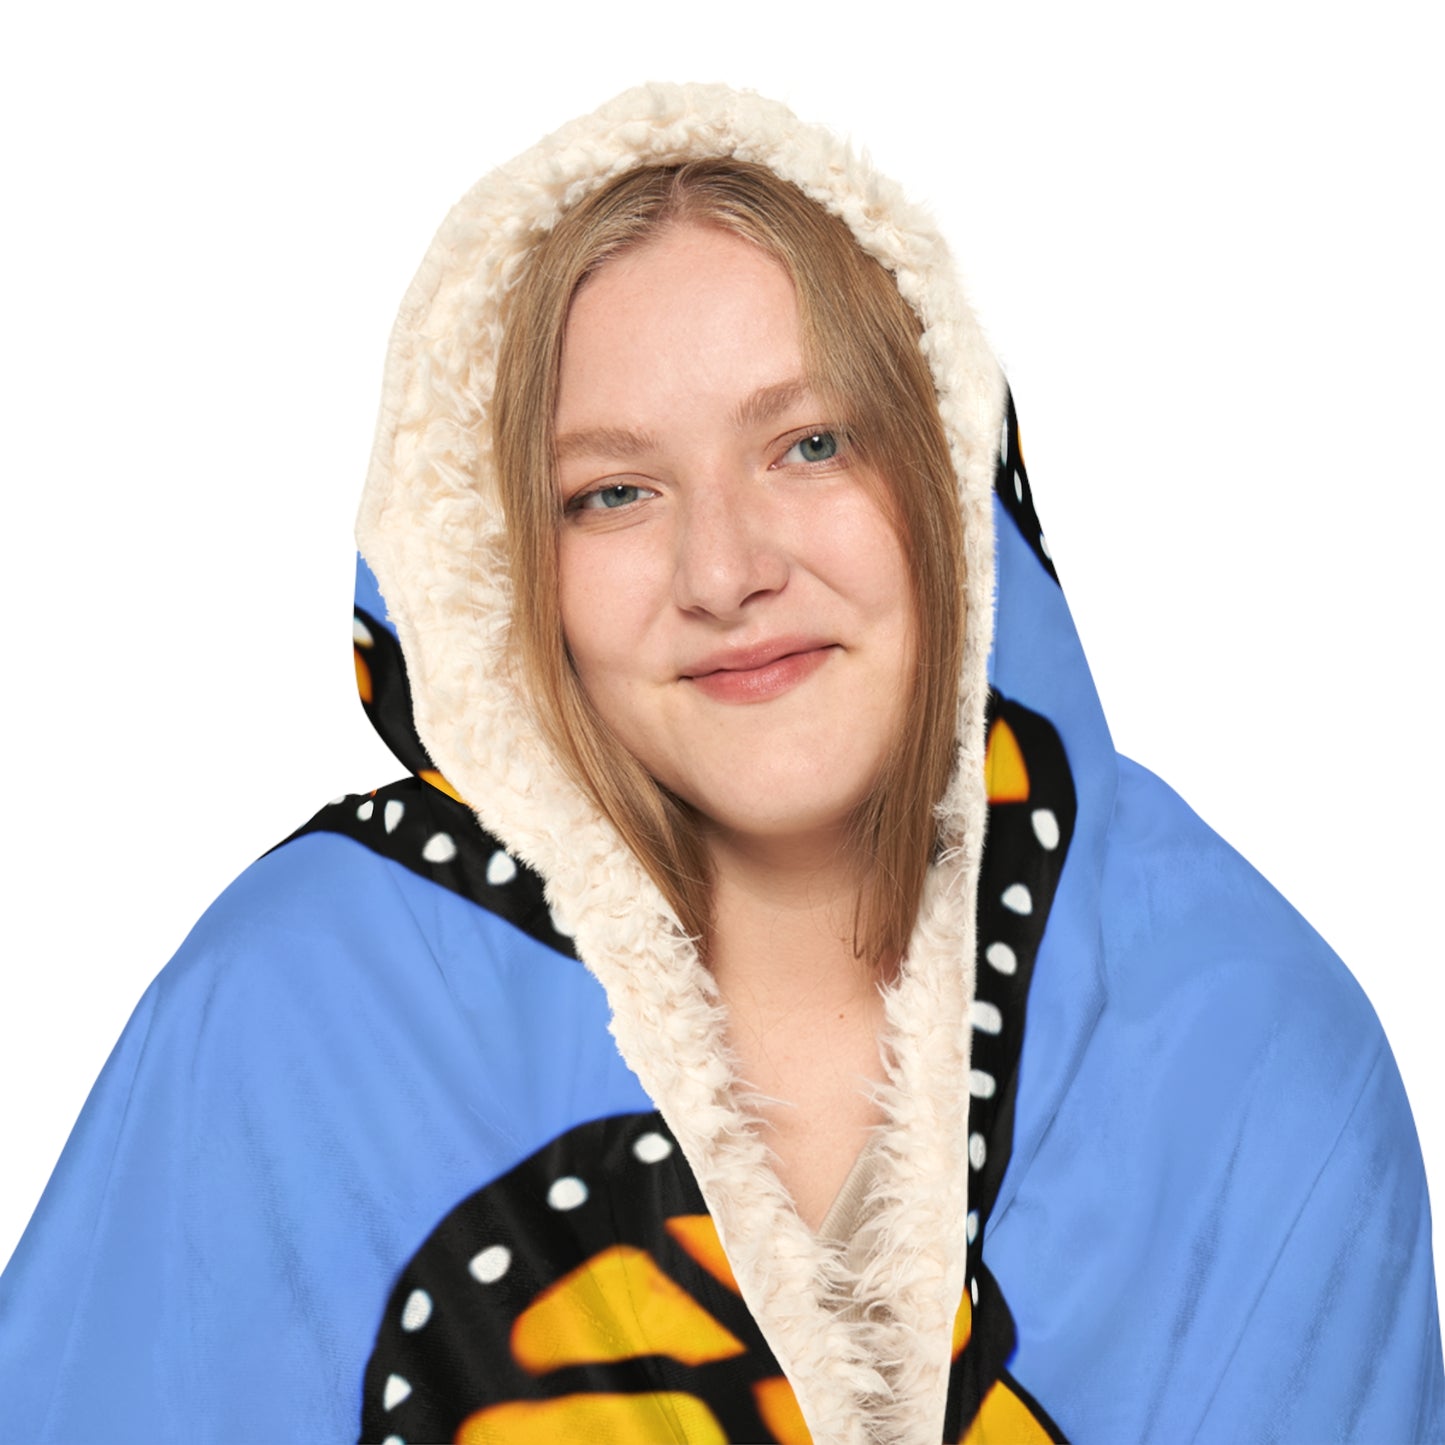 Monarch Butterfly Hooded Snuggle Blanket